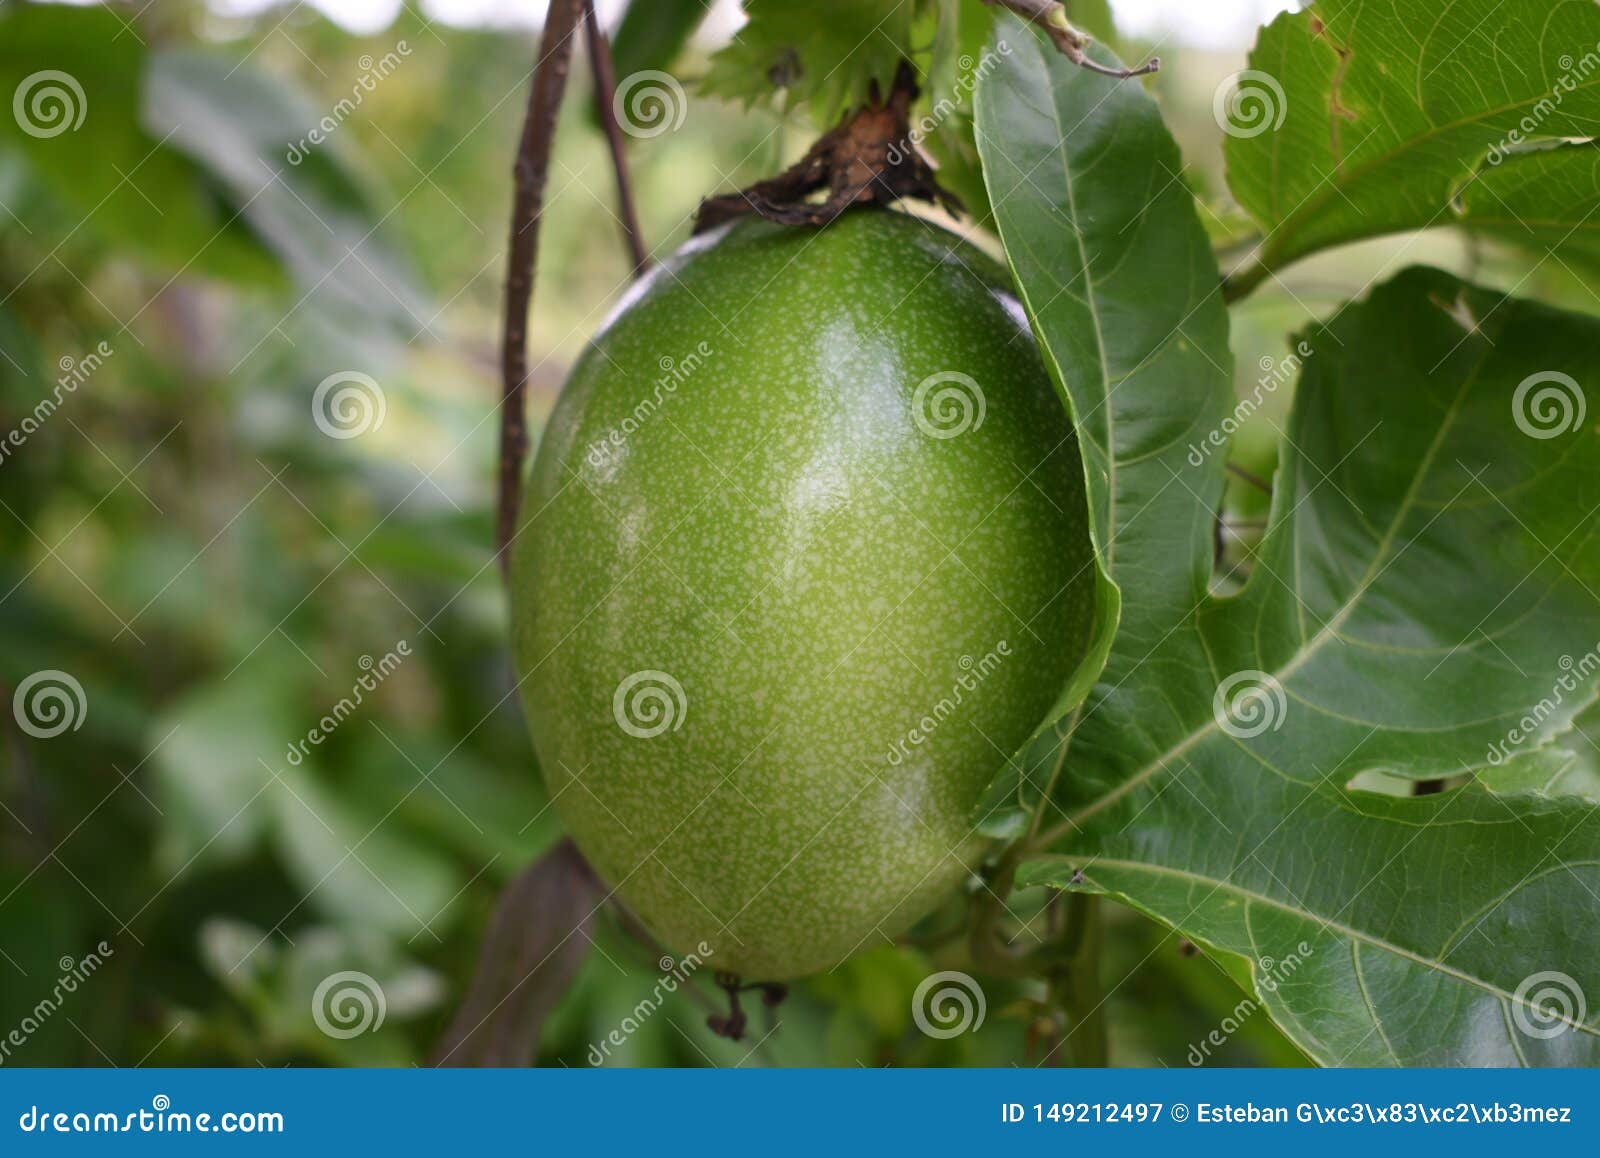 maracuyÃÂ¡ passiflora agriculture agricultura natural organic fruit passion